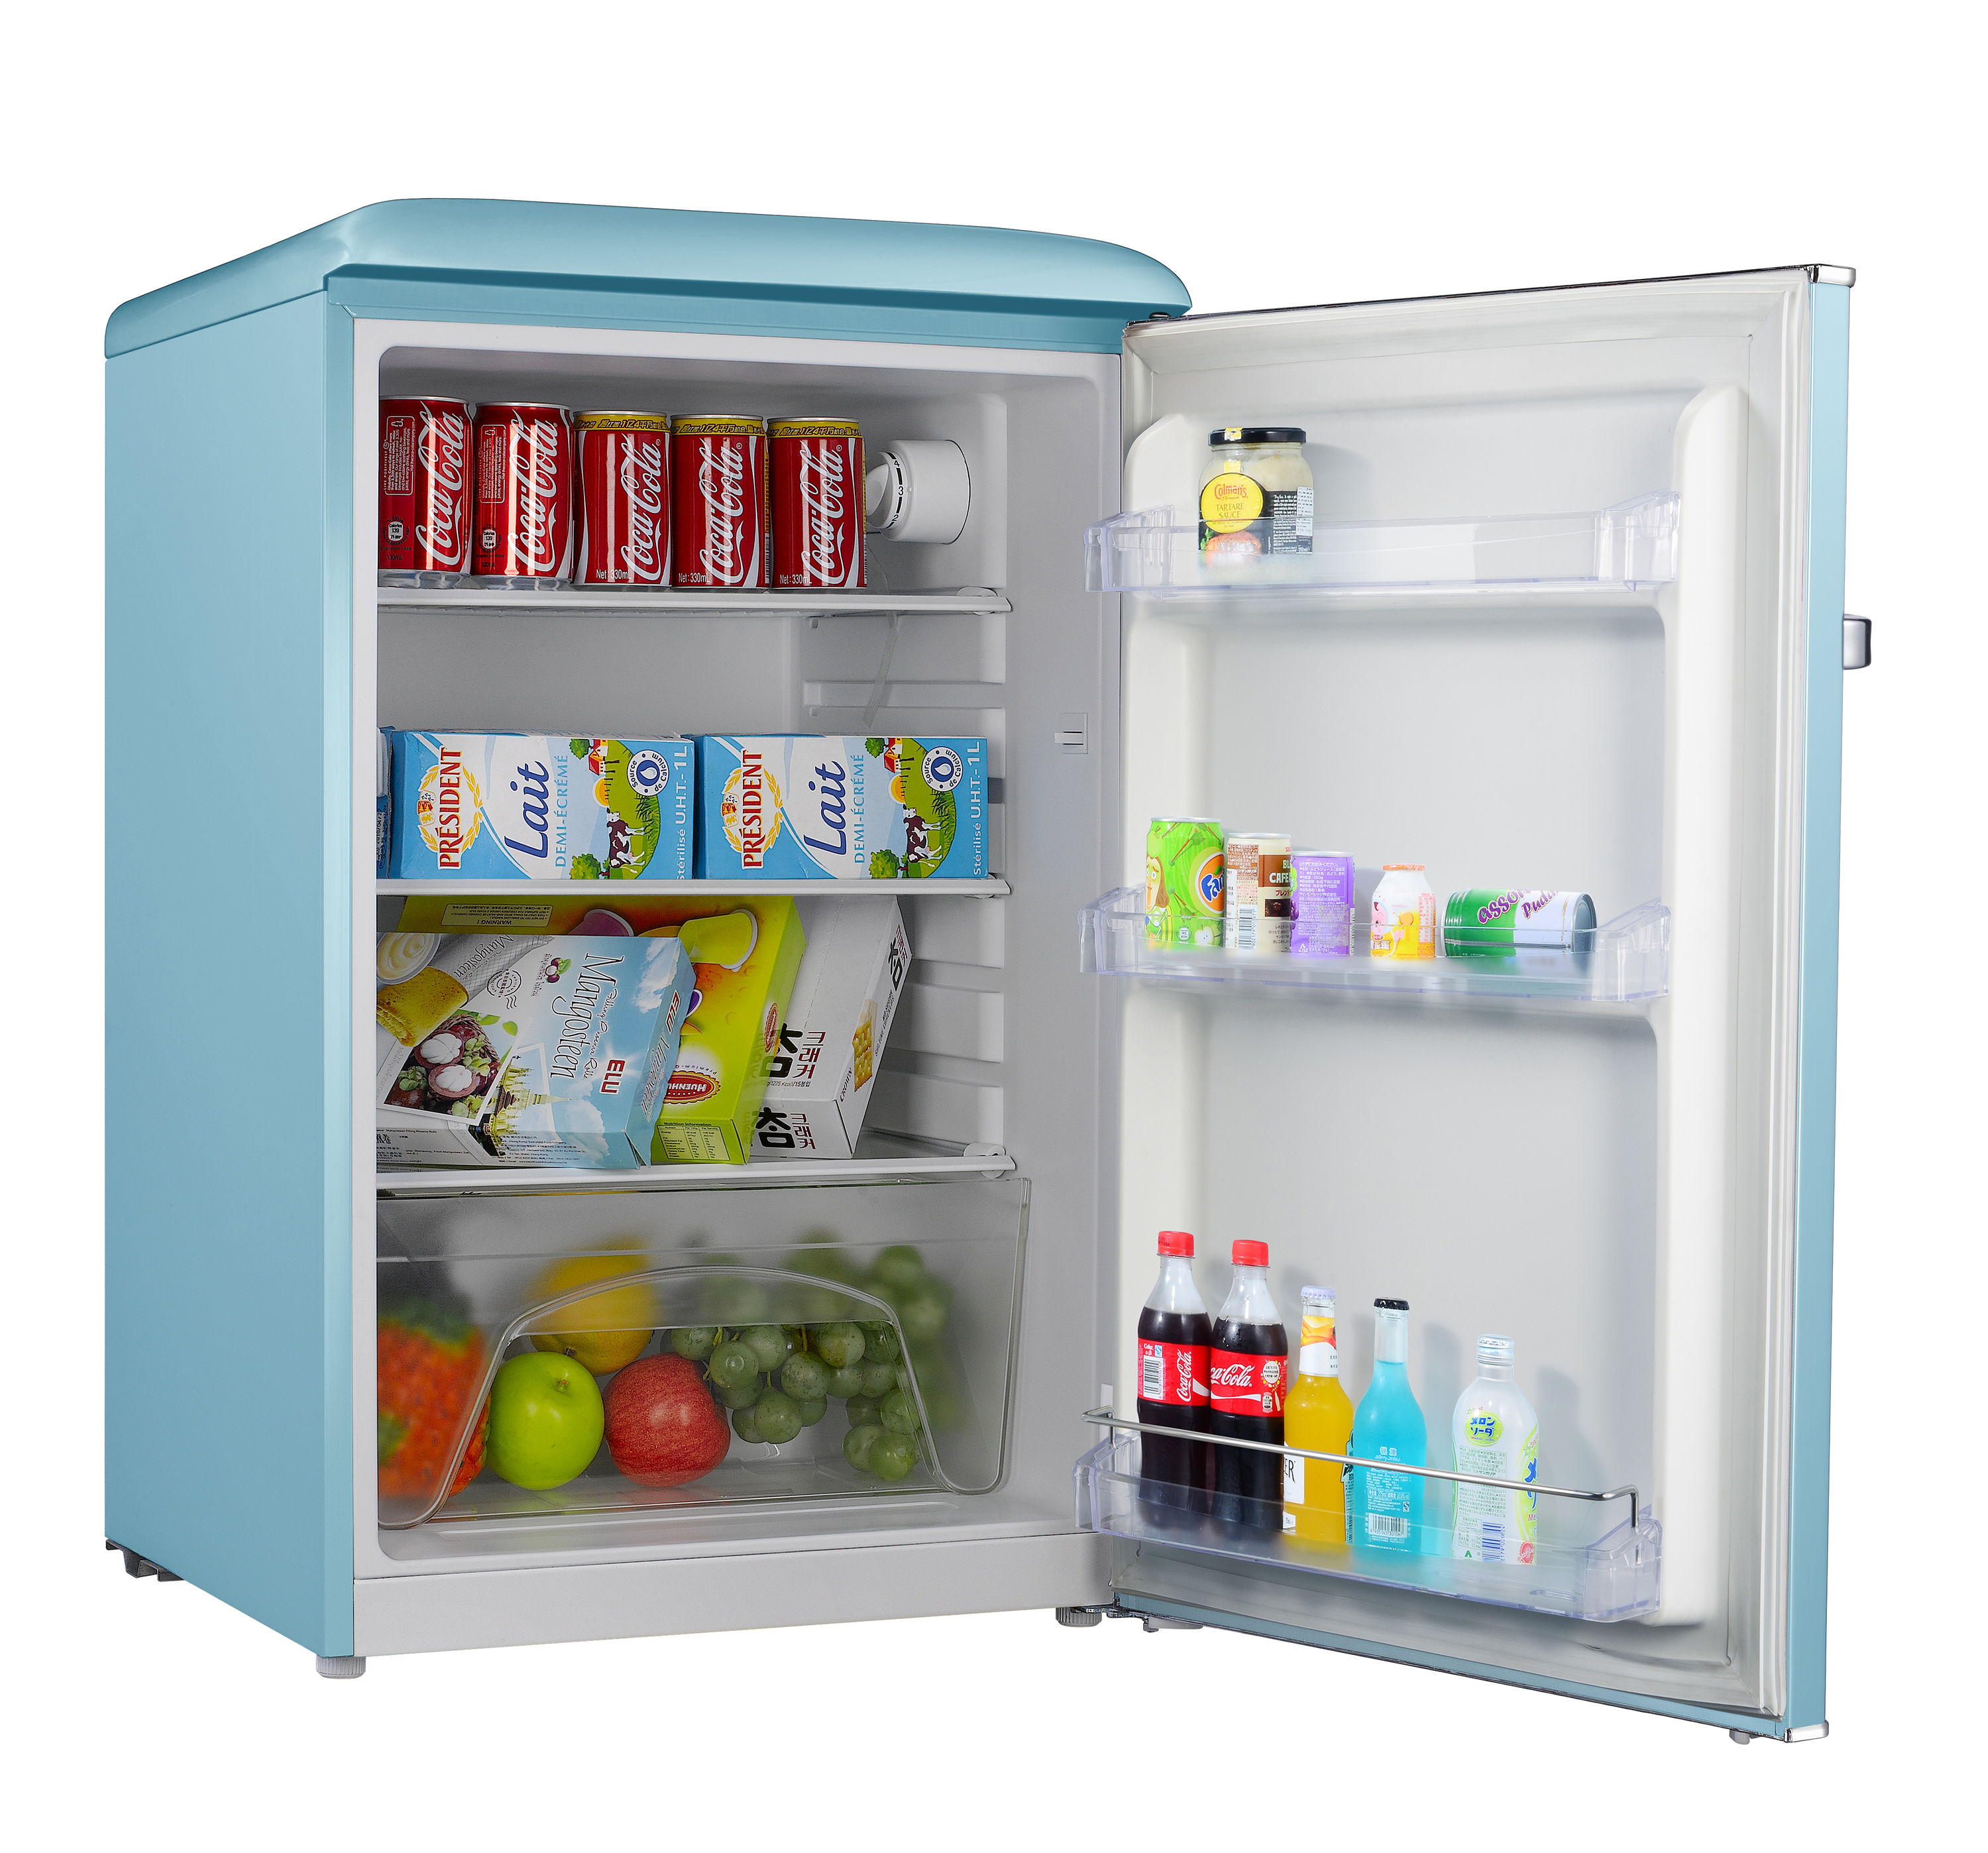 Galanz 4.3 Cu ft Single Door Mini Fridge, Stainless Steel refrigerator  little fridge